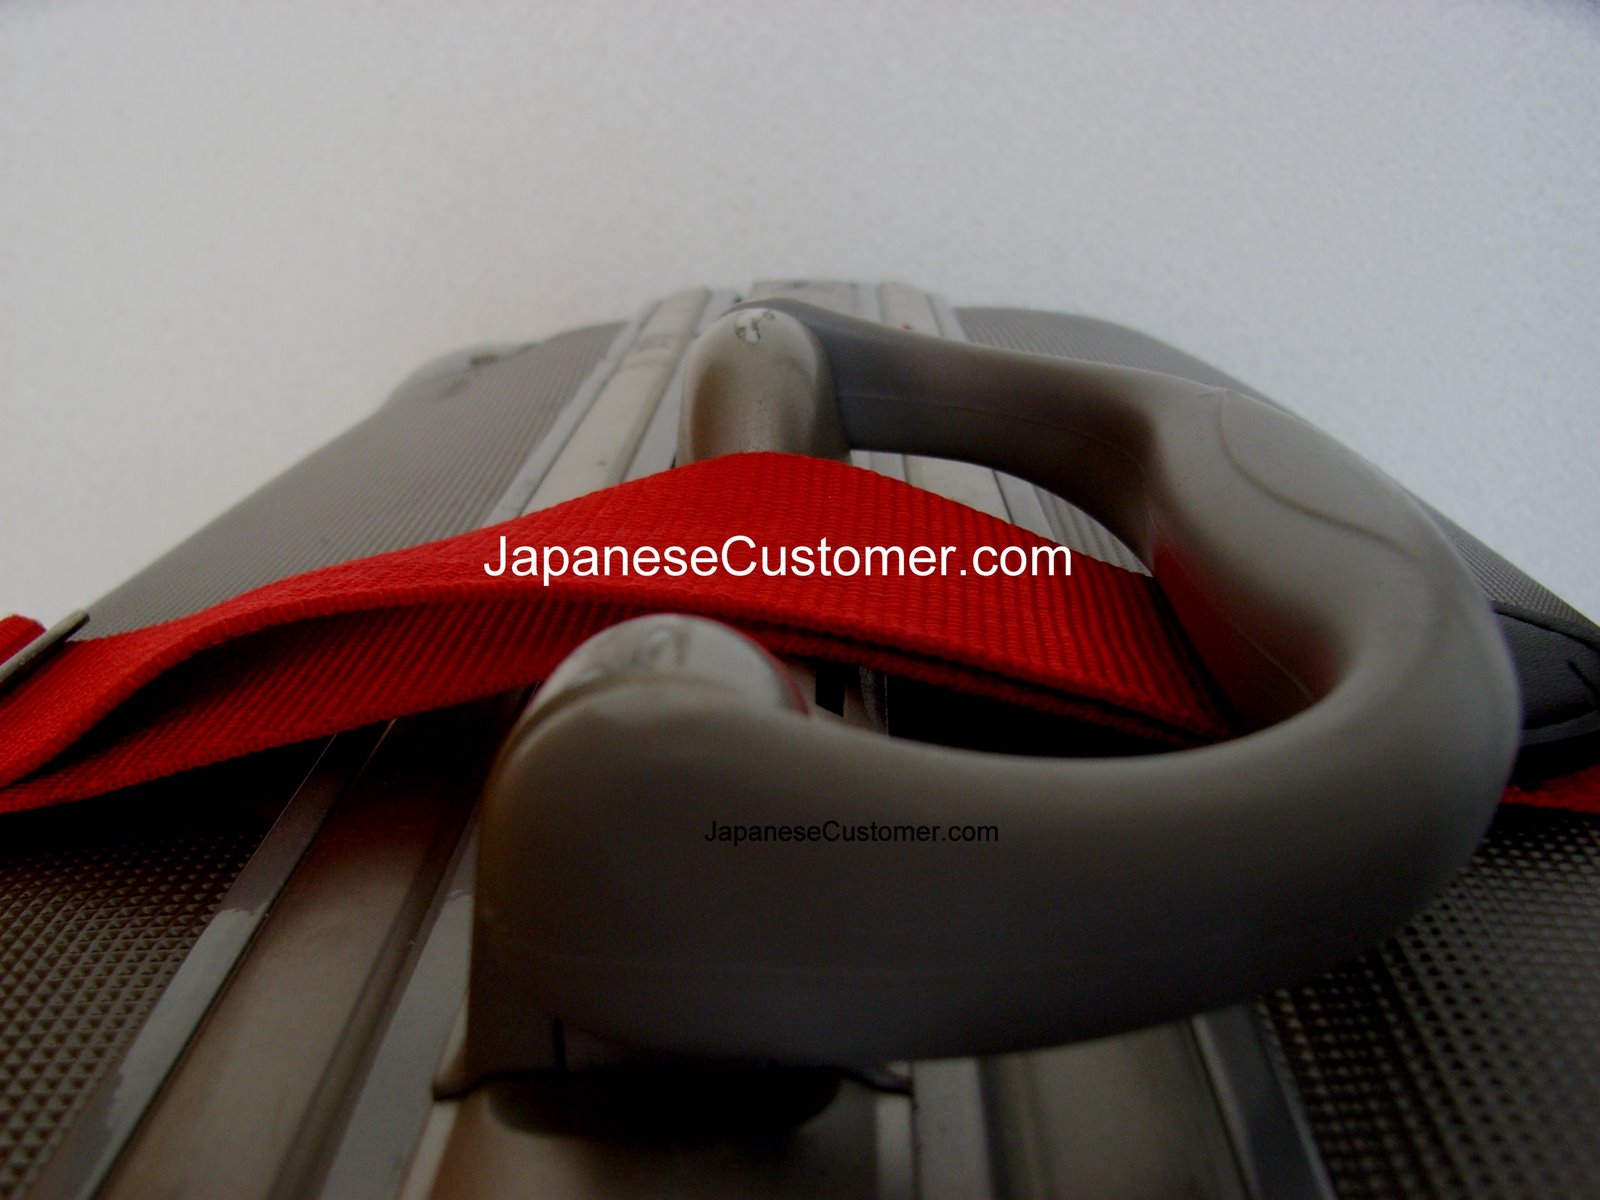 Japanese customer ready to travel Copyright Peter Hanami 2005